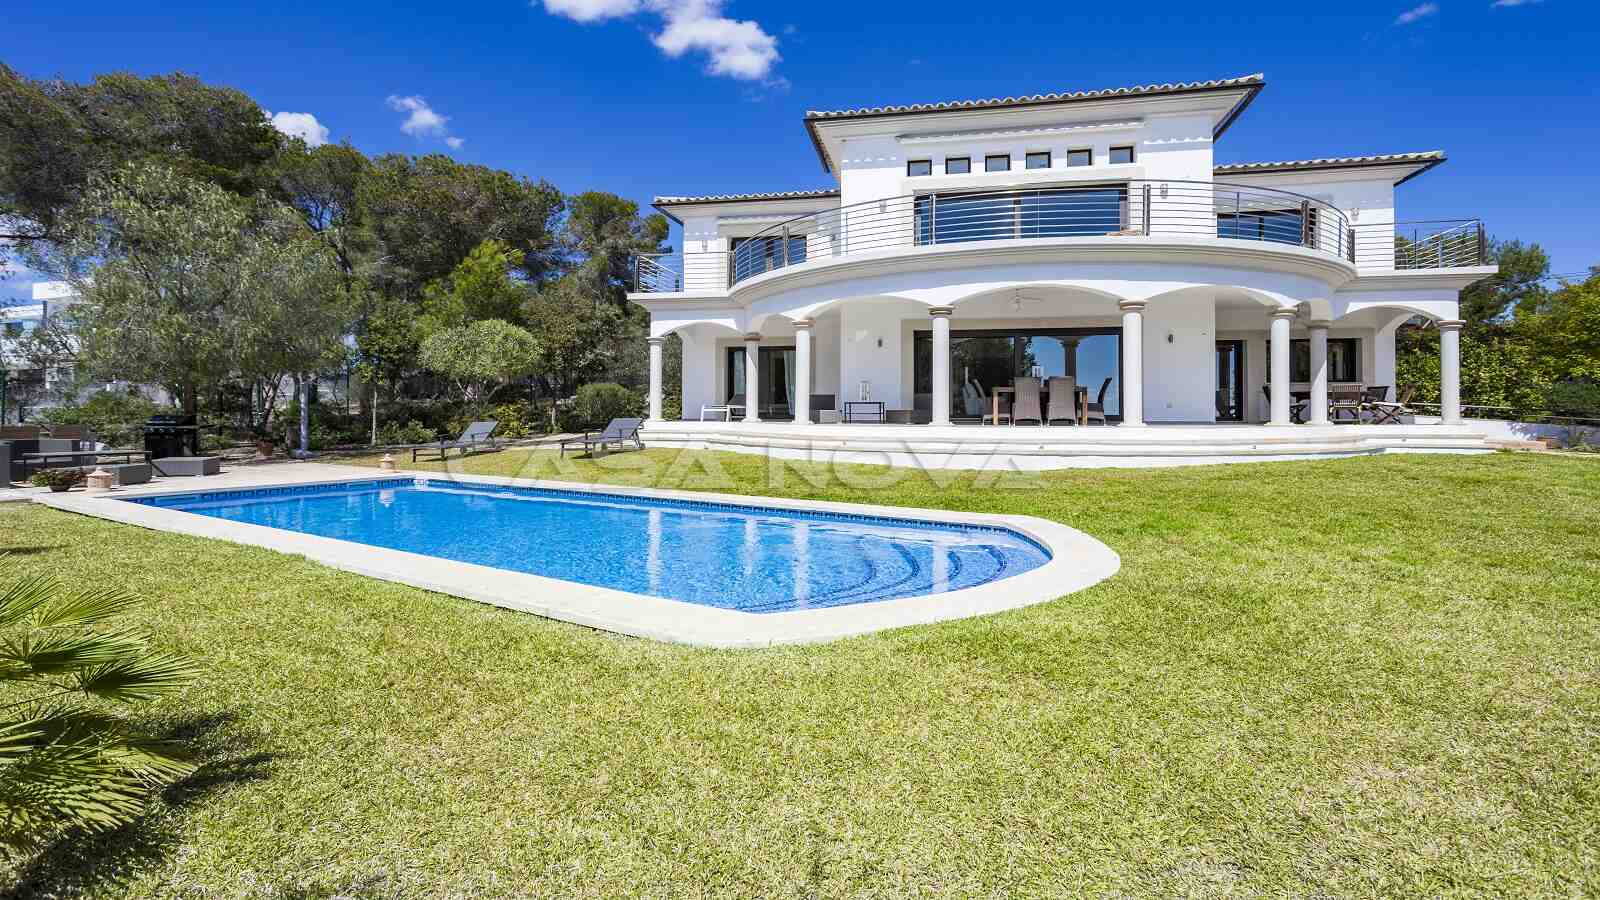 Haus Kaufen In Mallorca Meerblick